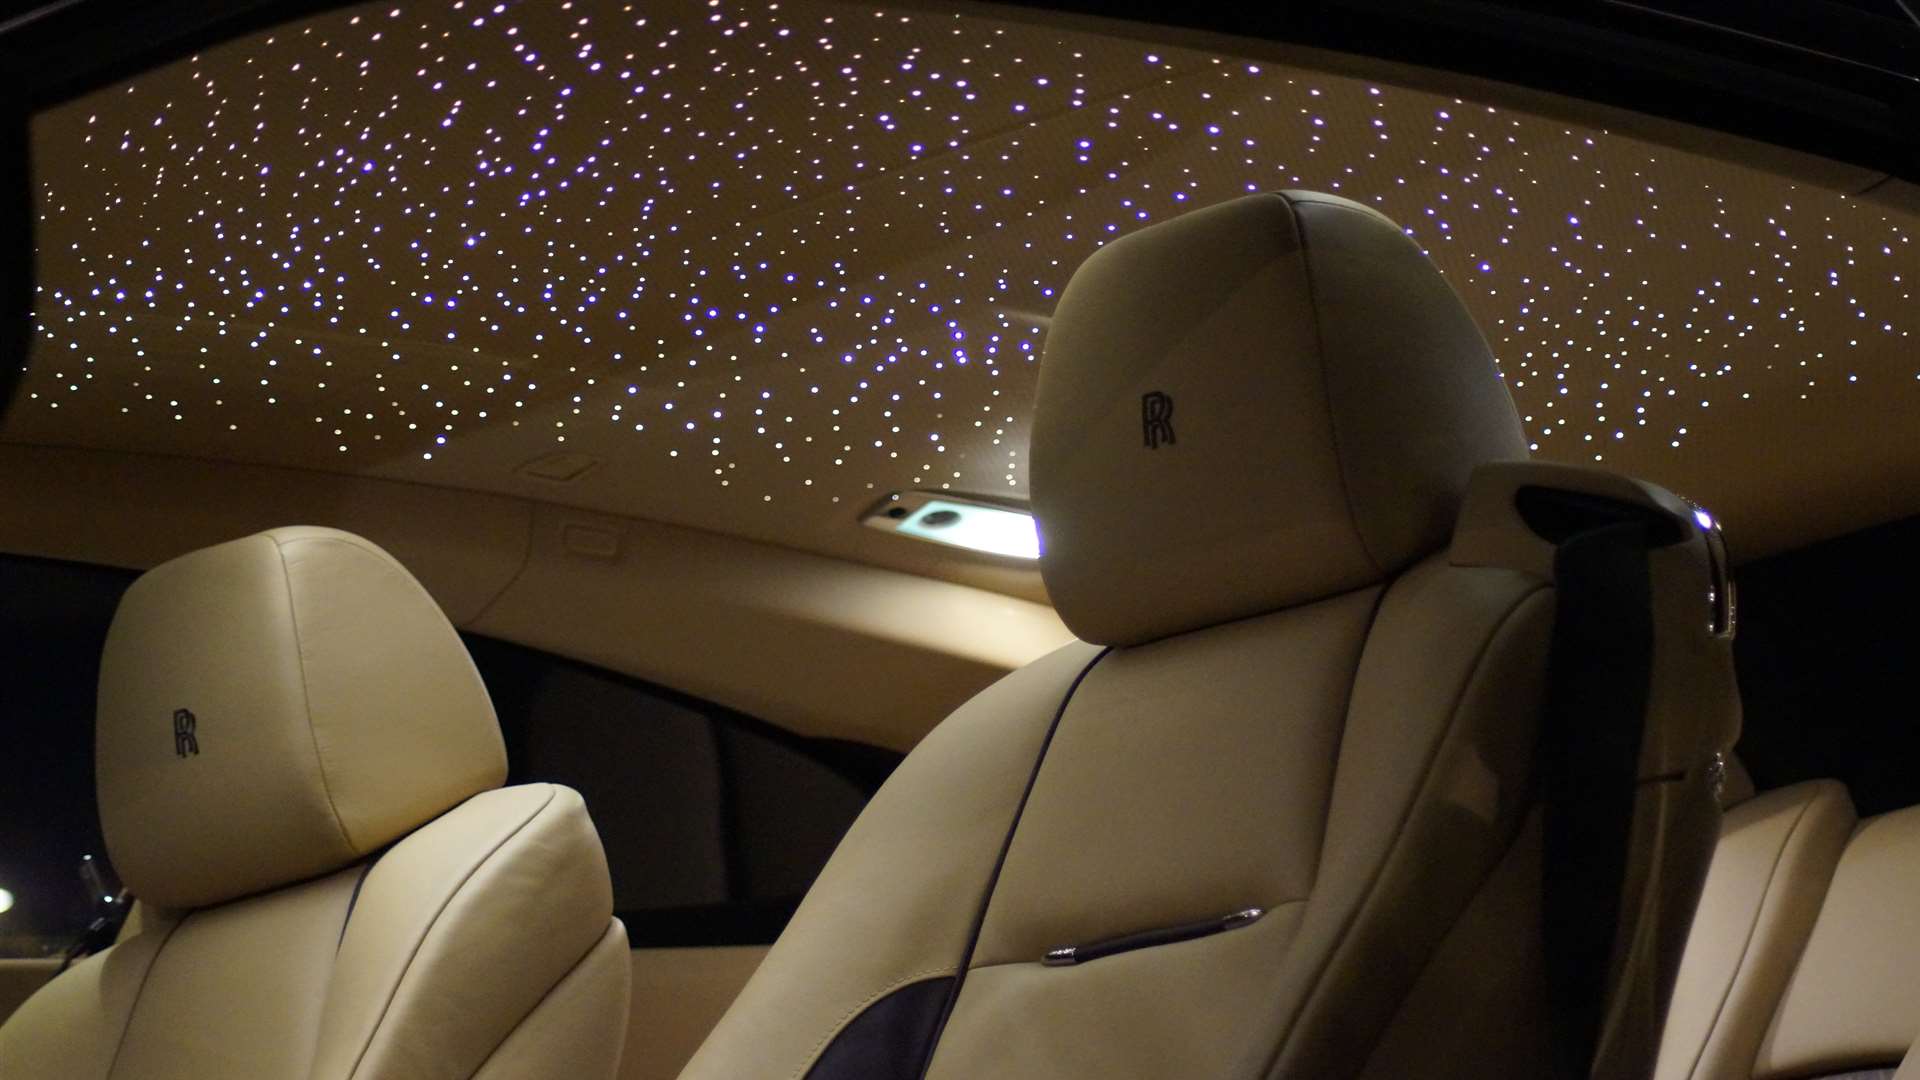 Hundreds of LEDs bring the night sky inside thanks to the quite stunning starlight headliner.